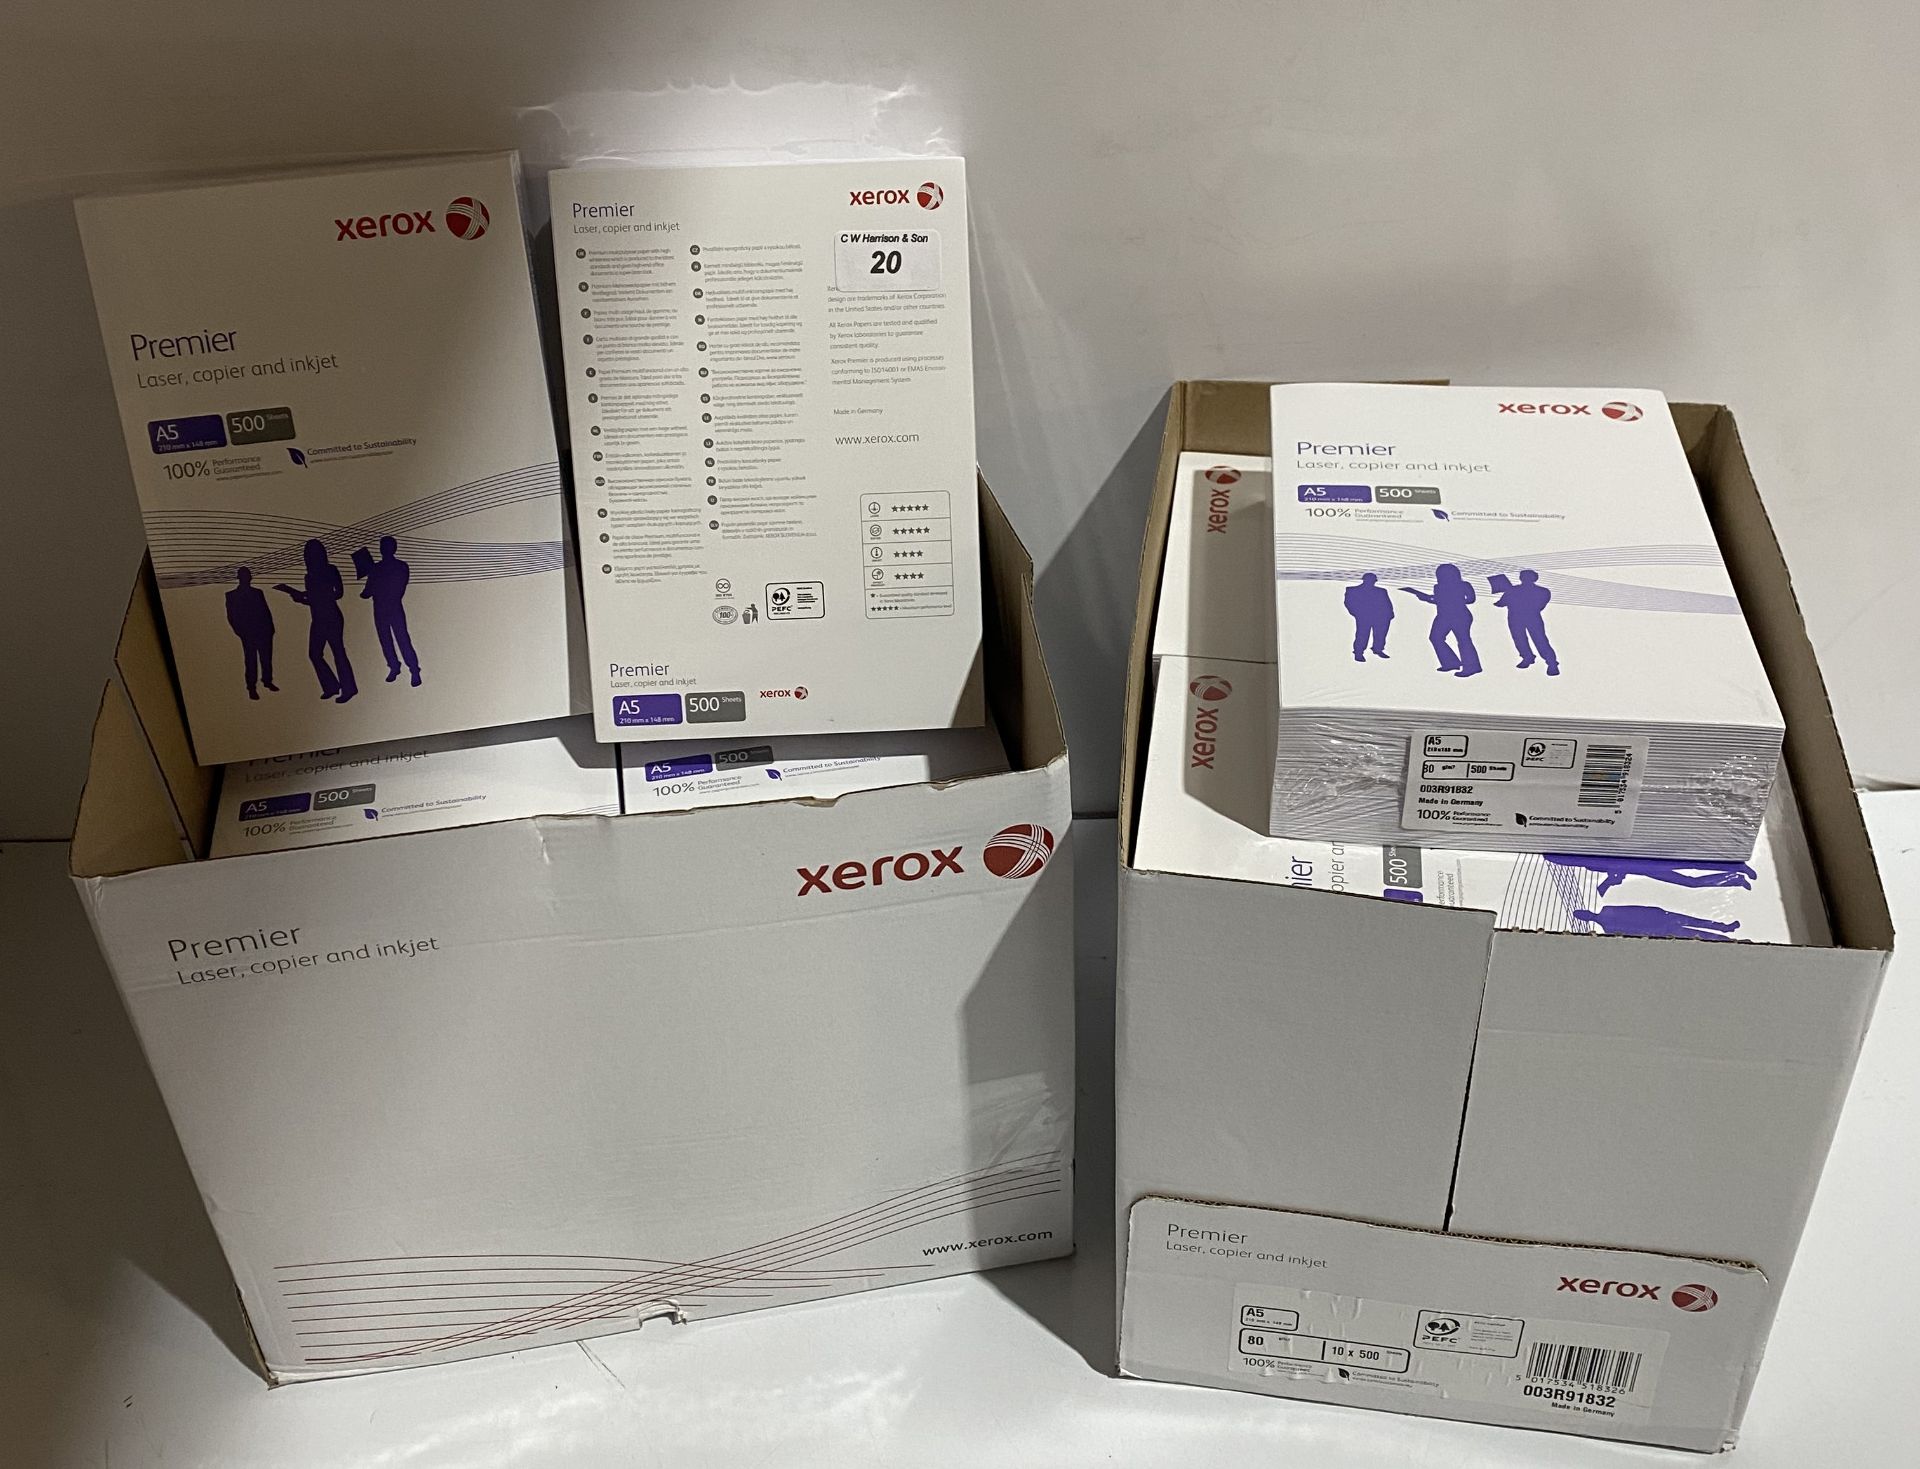 17 x reams 500 sheets each ream Xerox A5 copier paper white (saleroom location: H11)